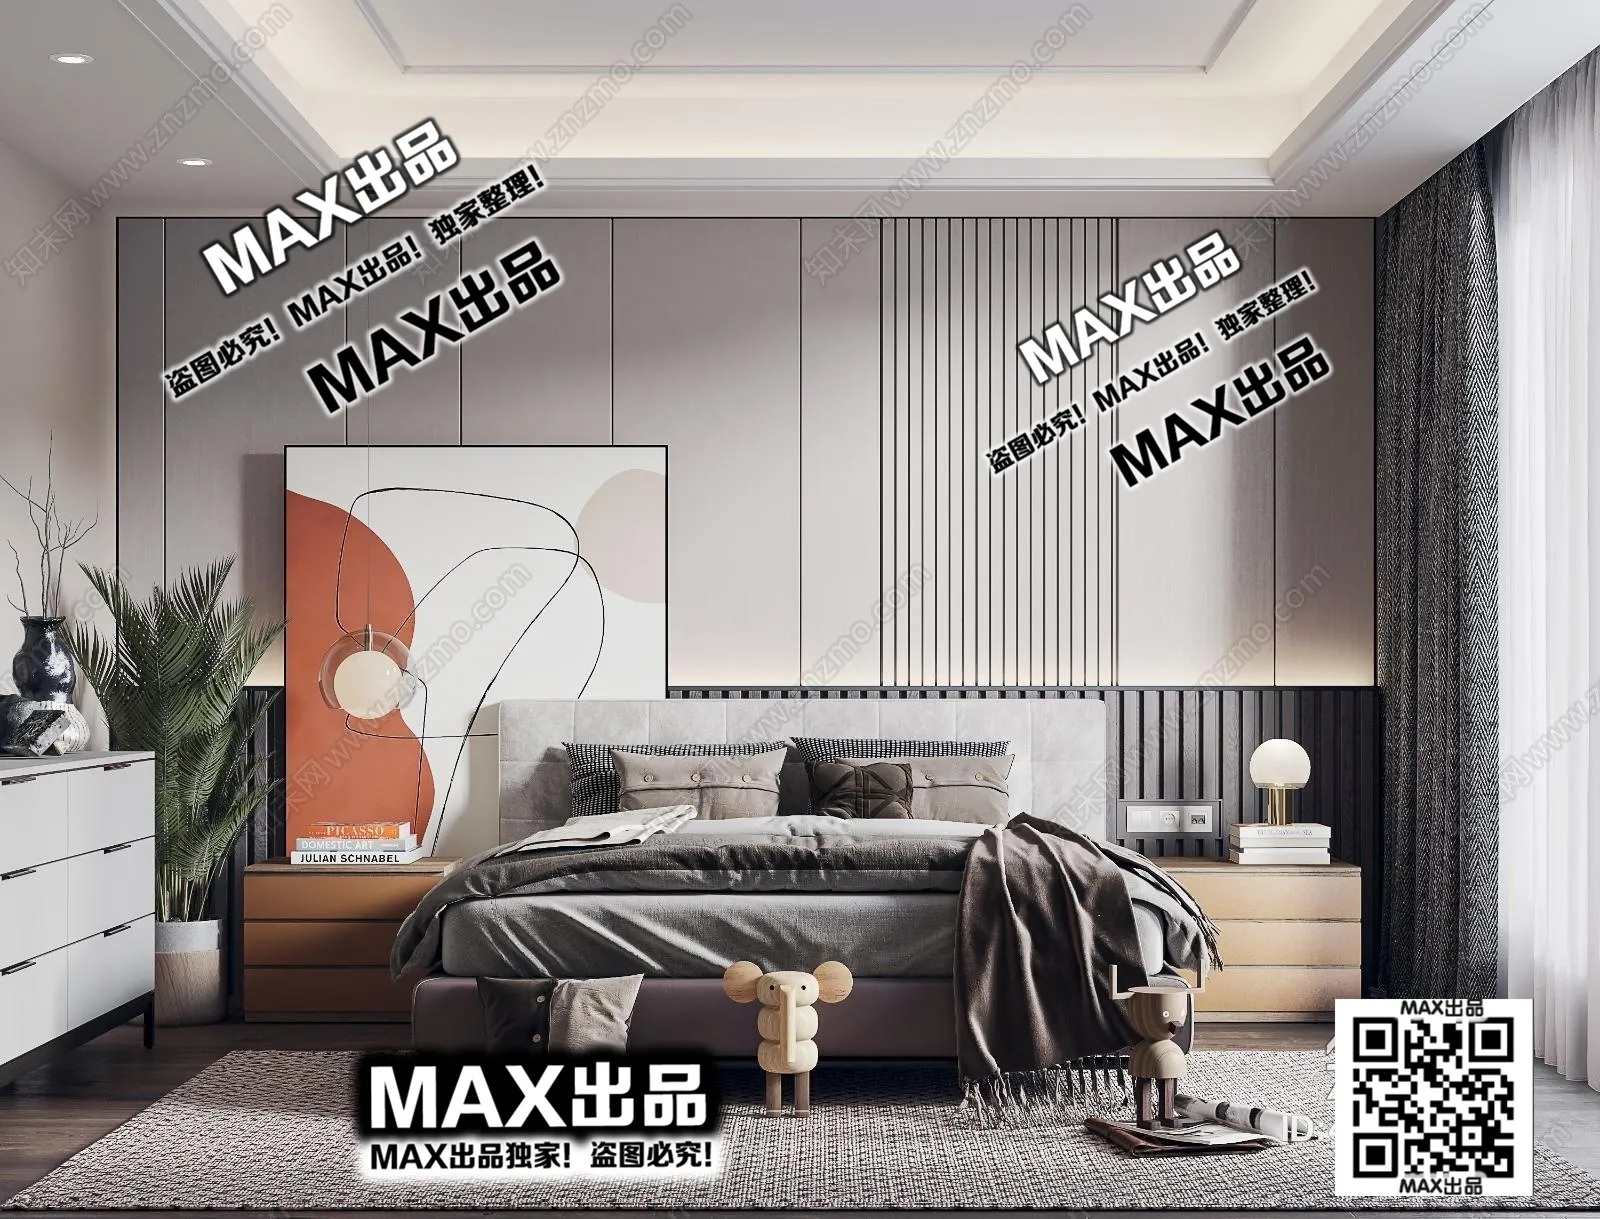 3DS MAX SCENES – LIVING ROOM – 006